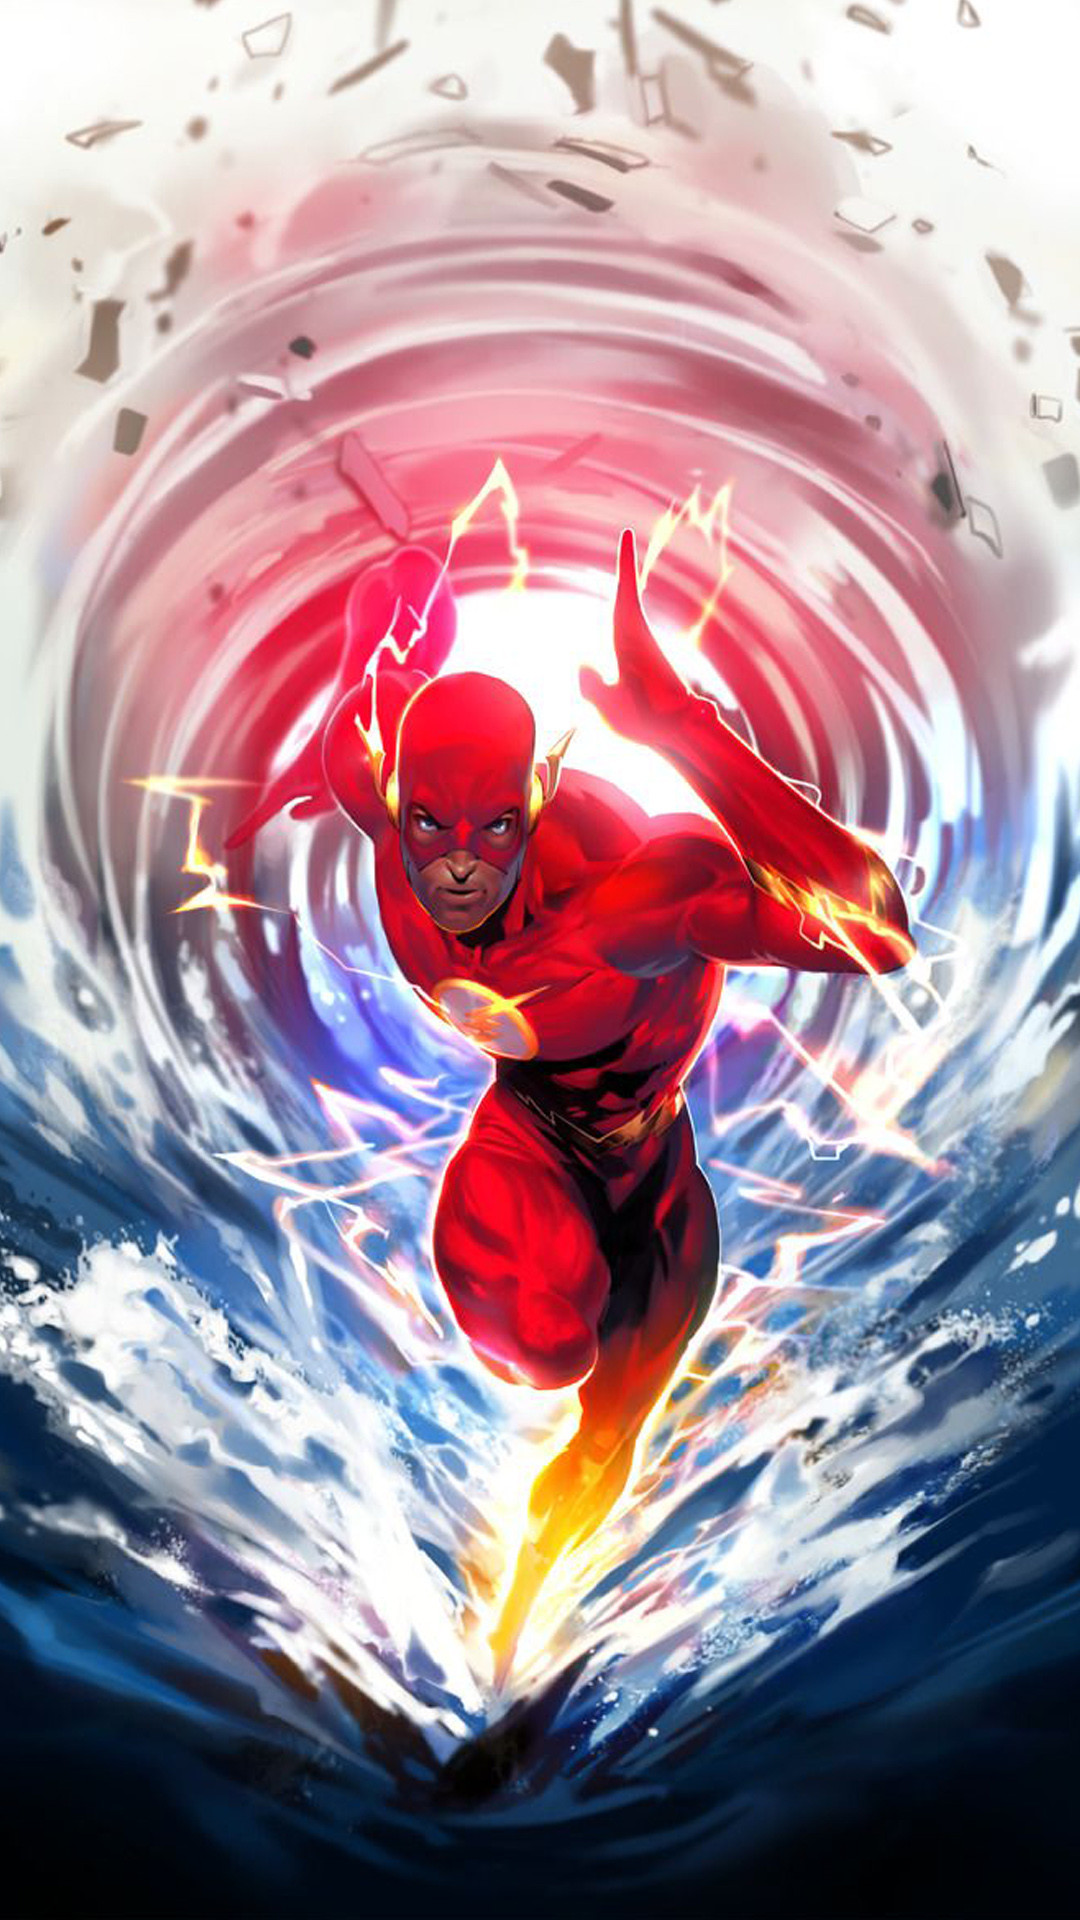 flash wallpaper,fictional character,illustration,graphic design,superhero,flash